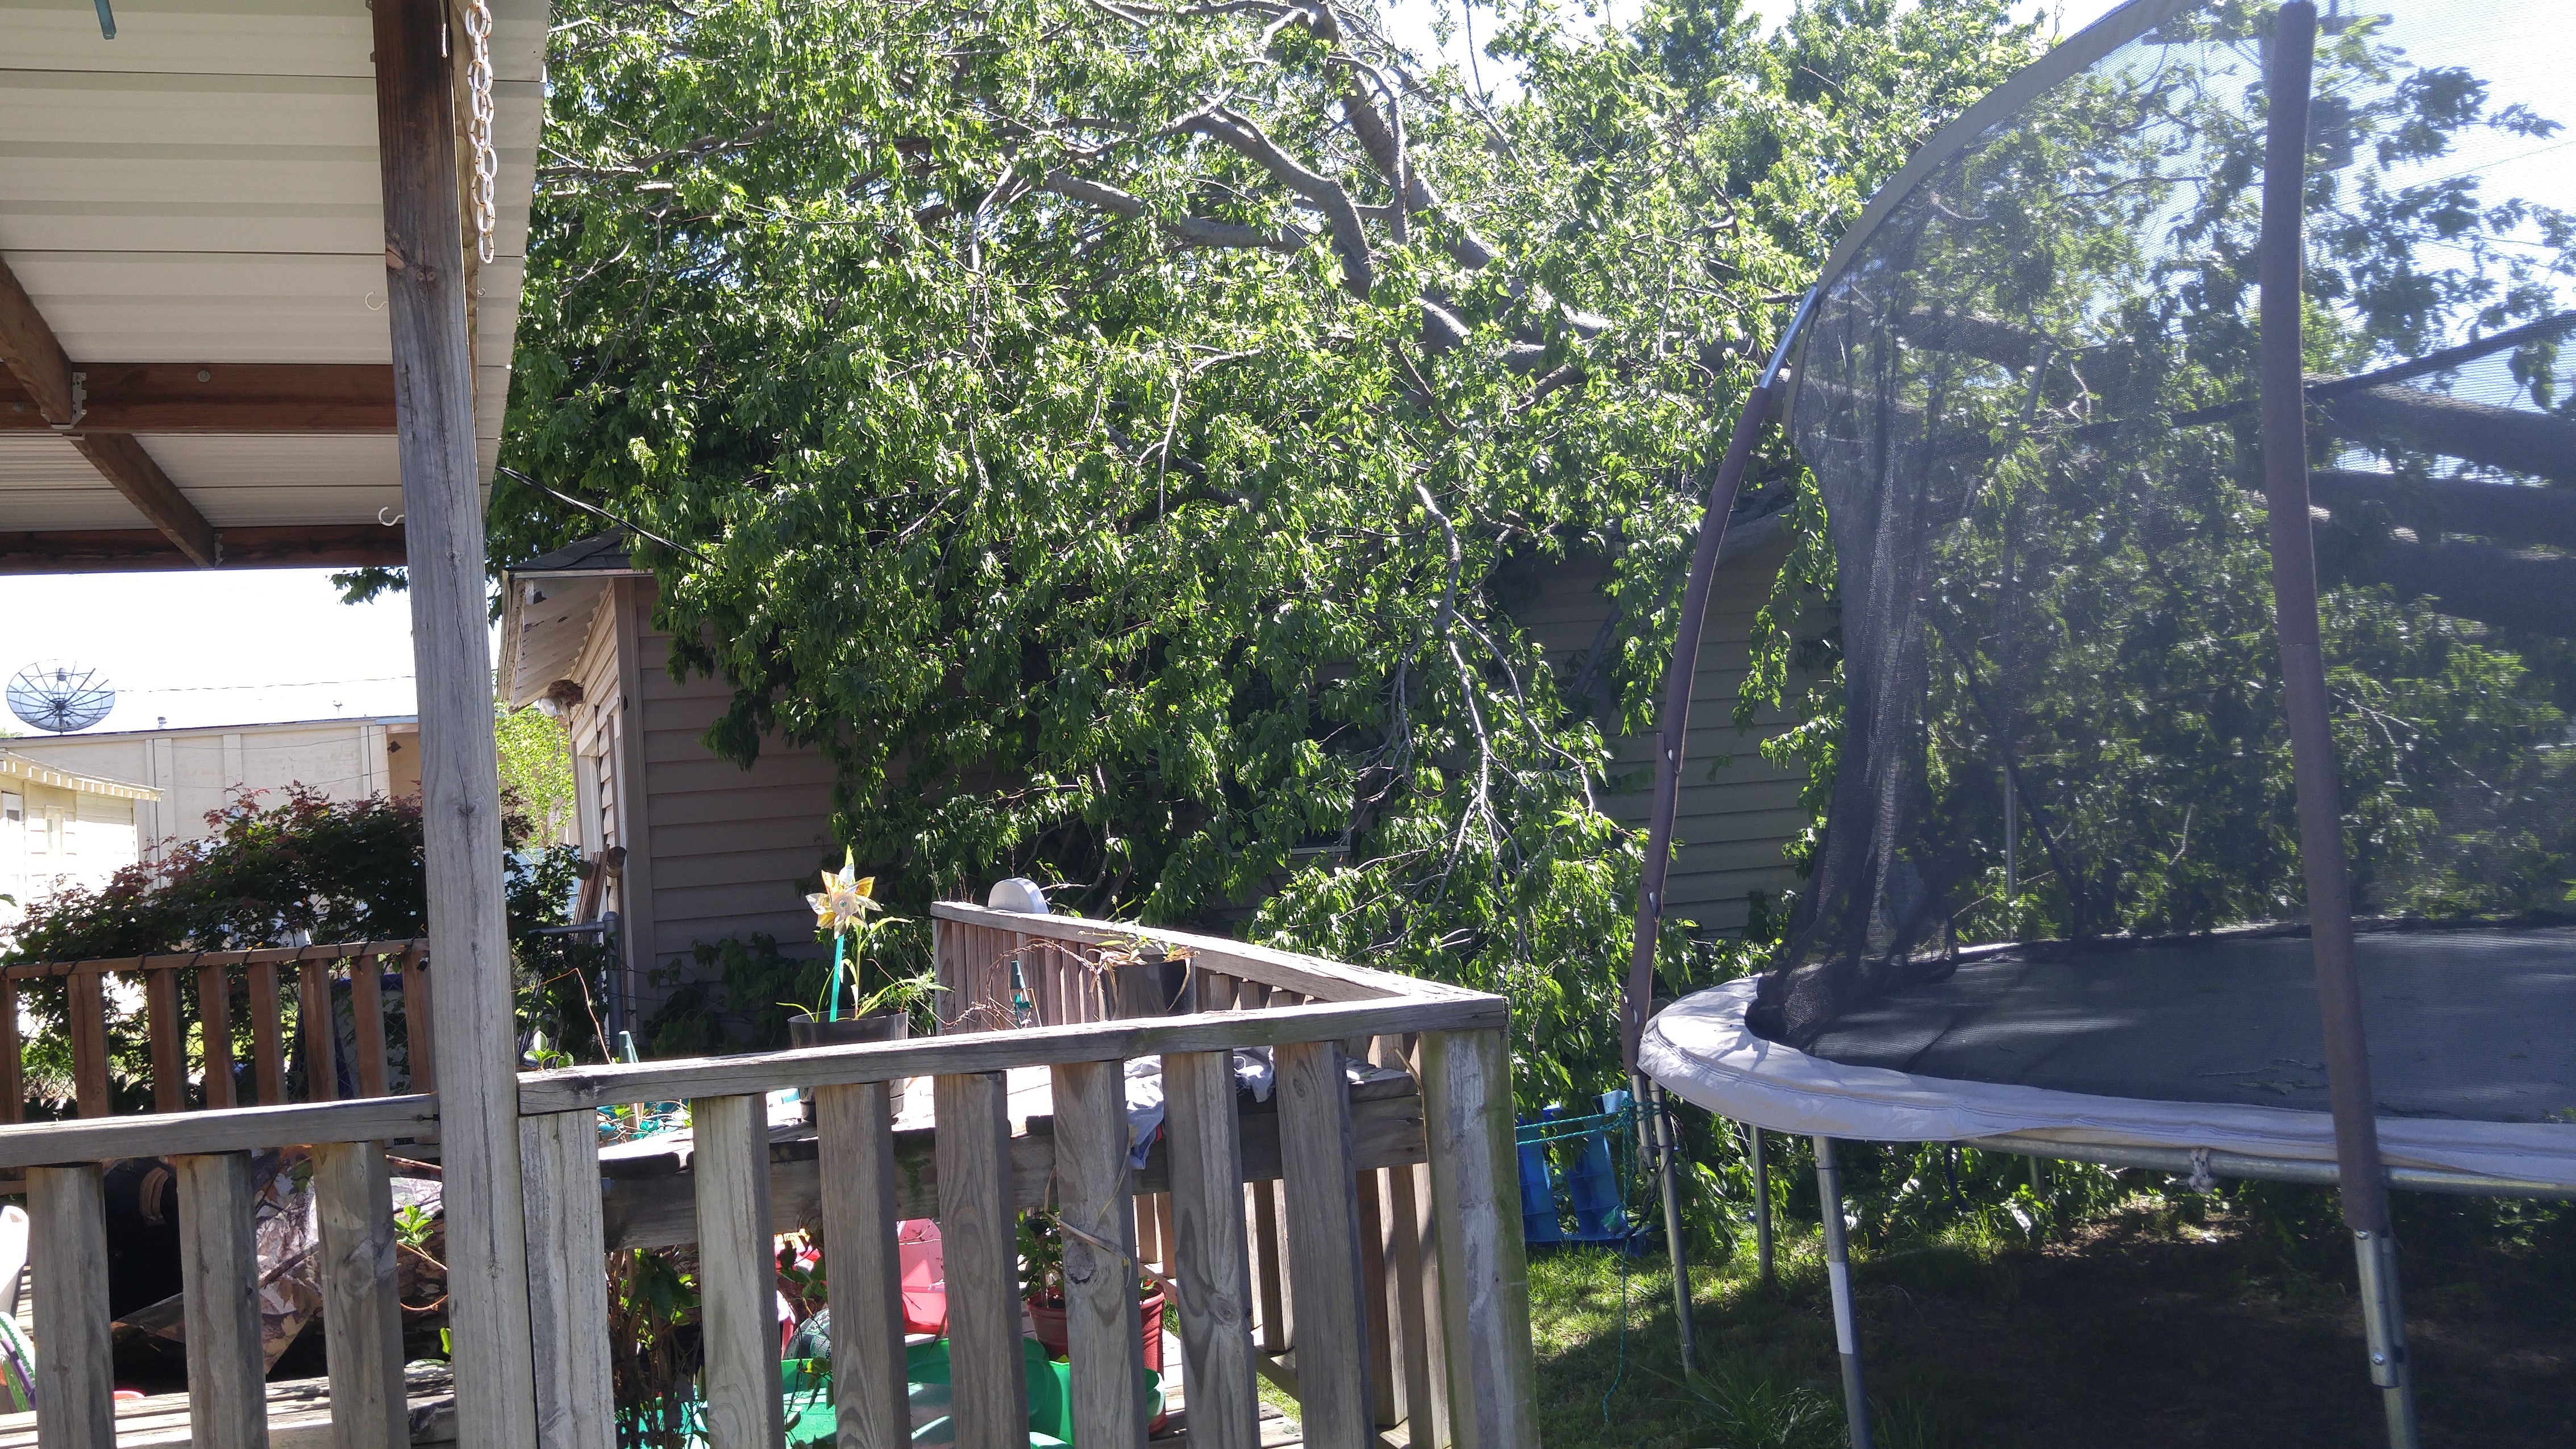 Fallen tree damages house